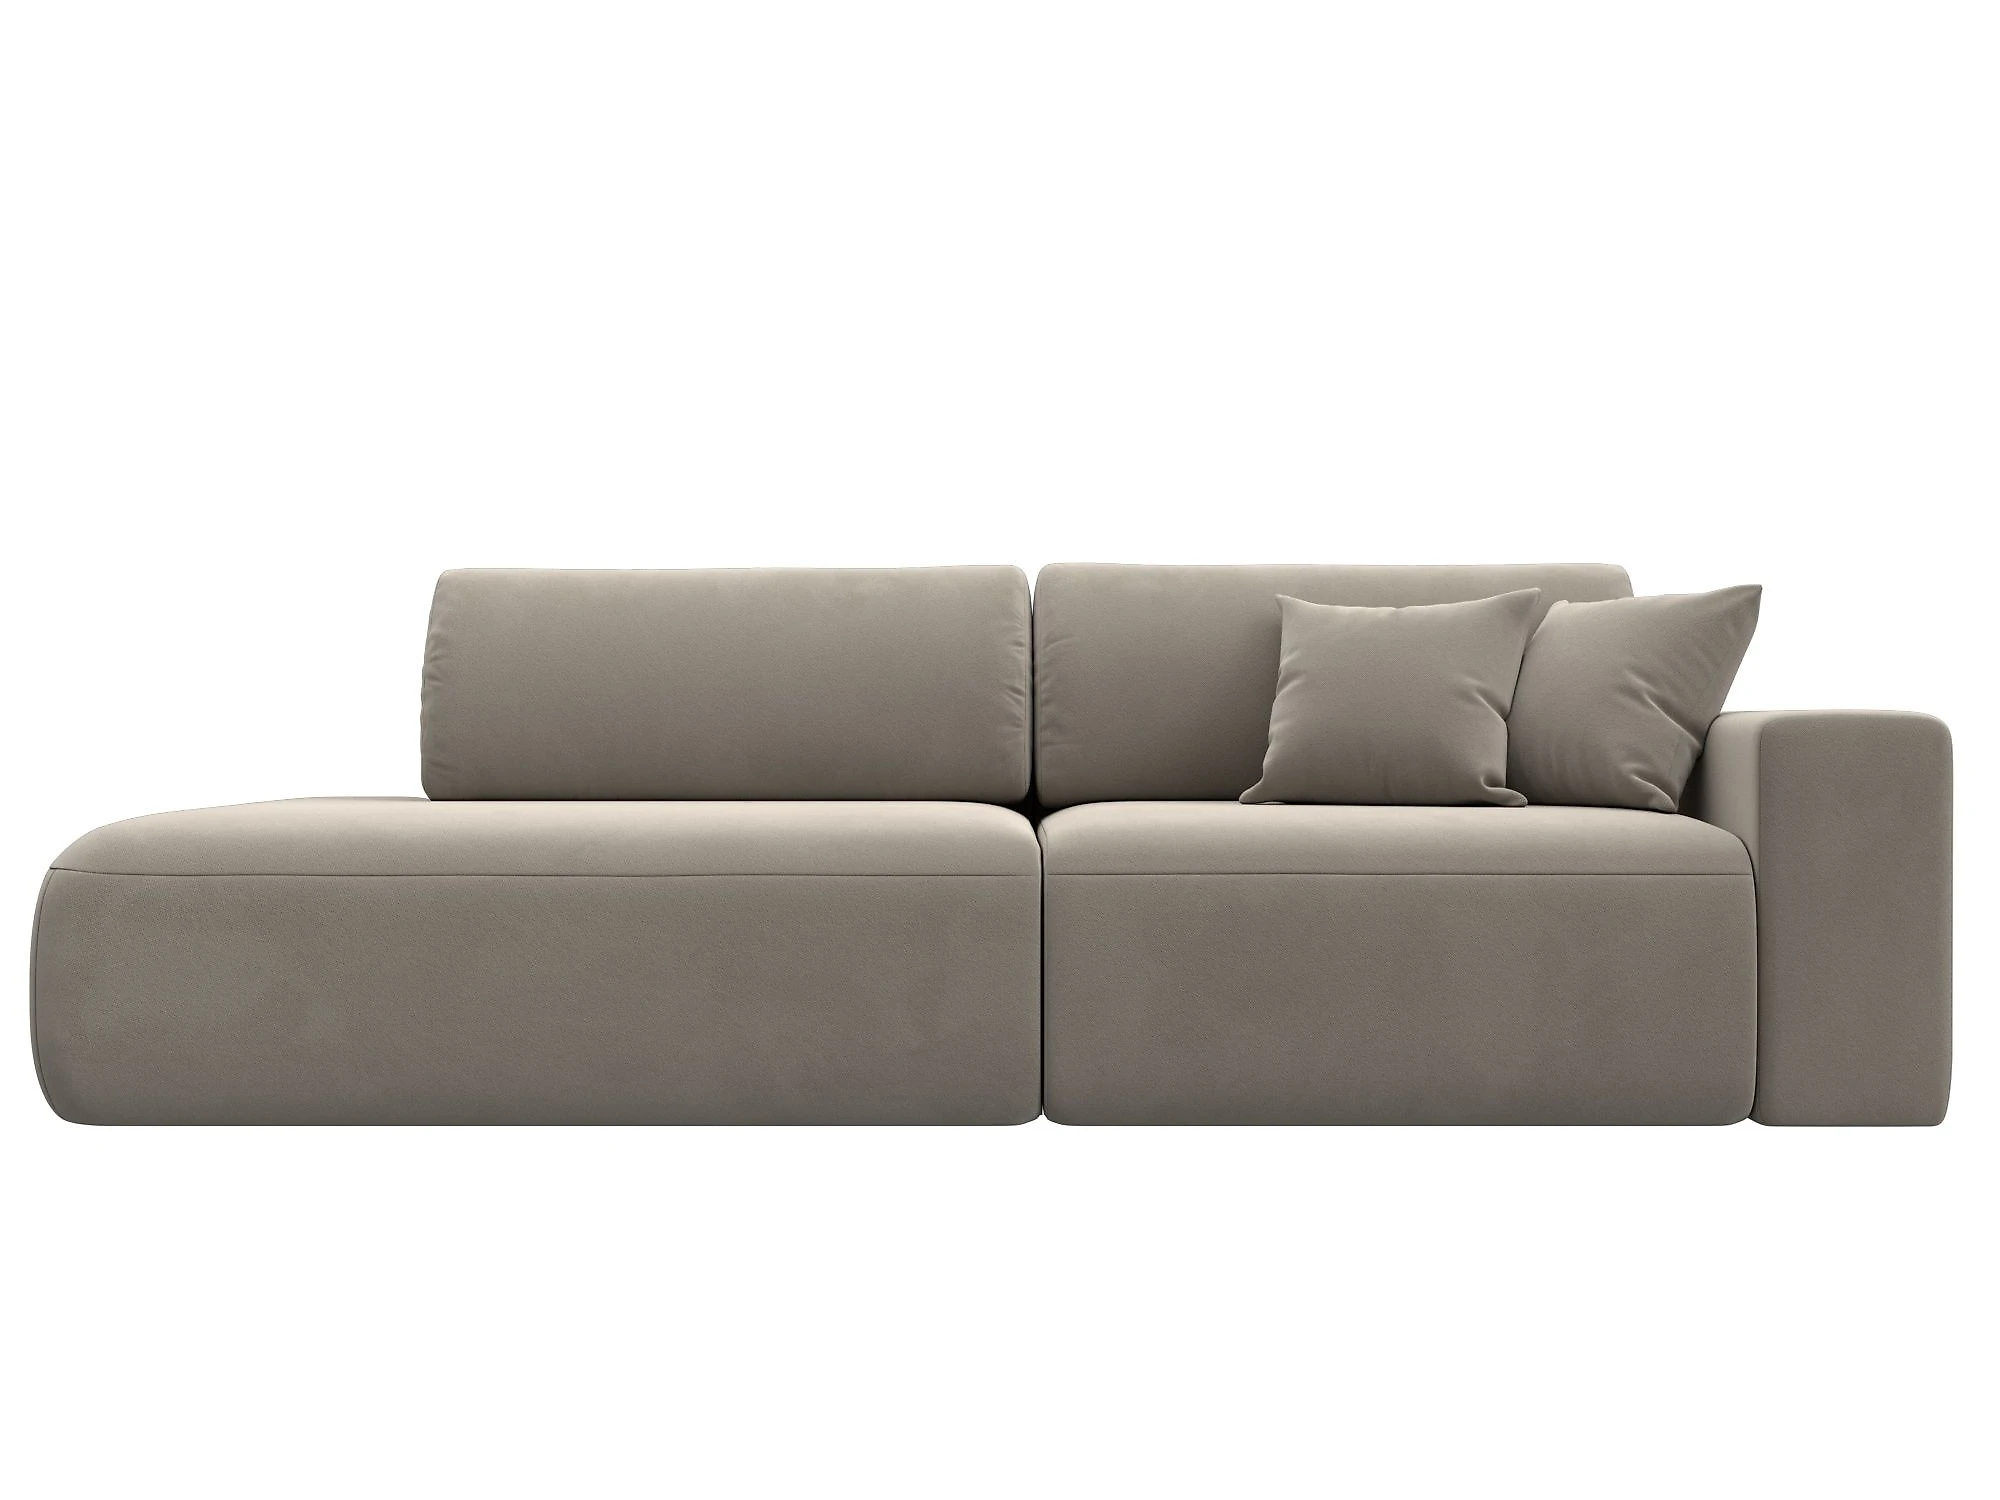 Прямой диван модерн Лига-036 Модерн Дизайн 1